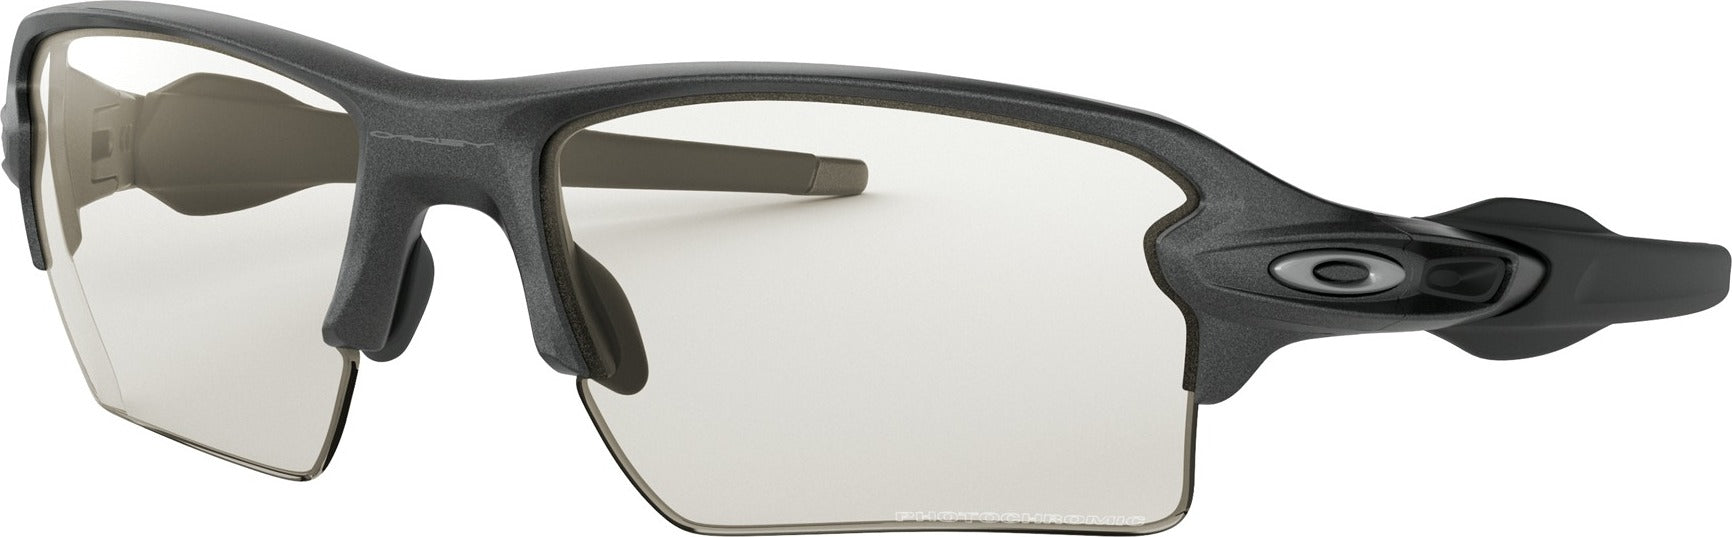 Oakley Flak  XL Sunglasses - Steel - Photochromic Lens - Men's |  Altitude Sports